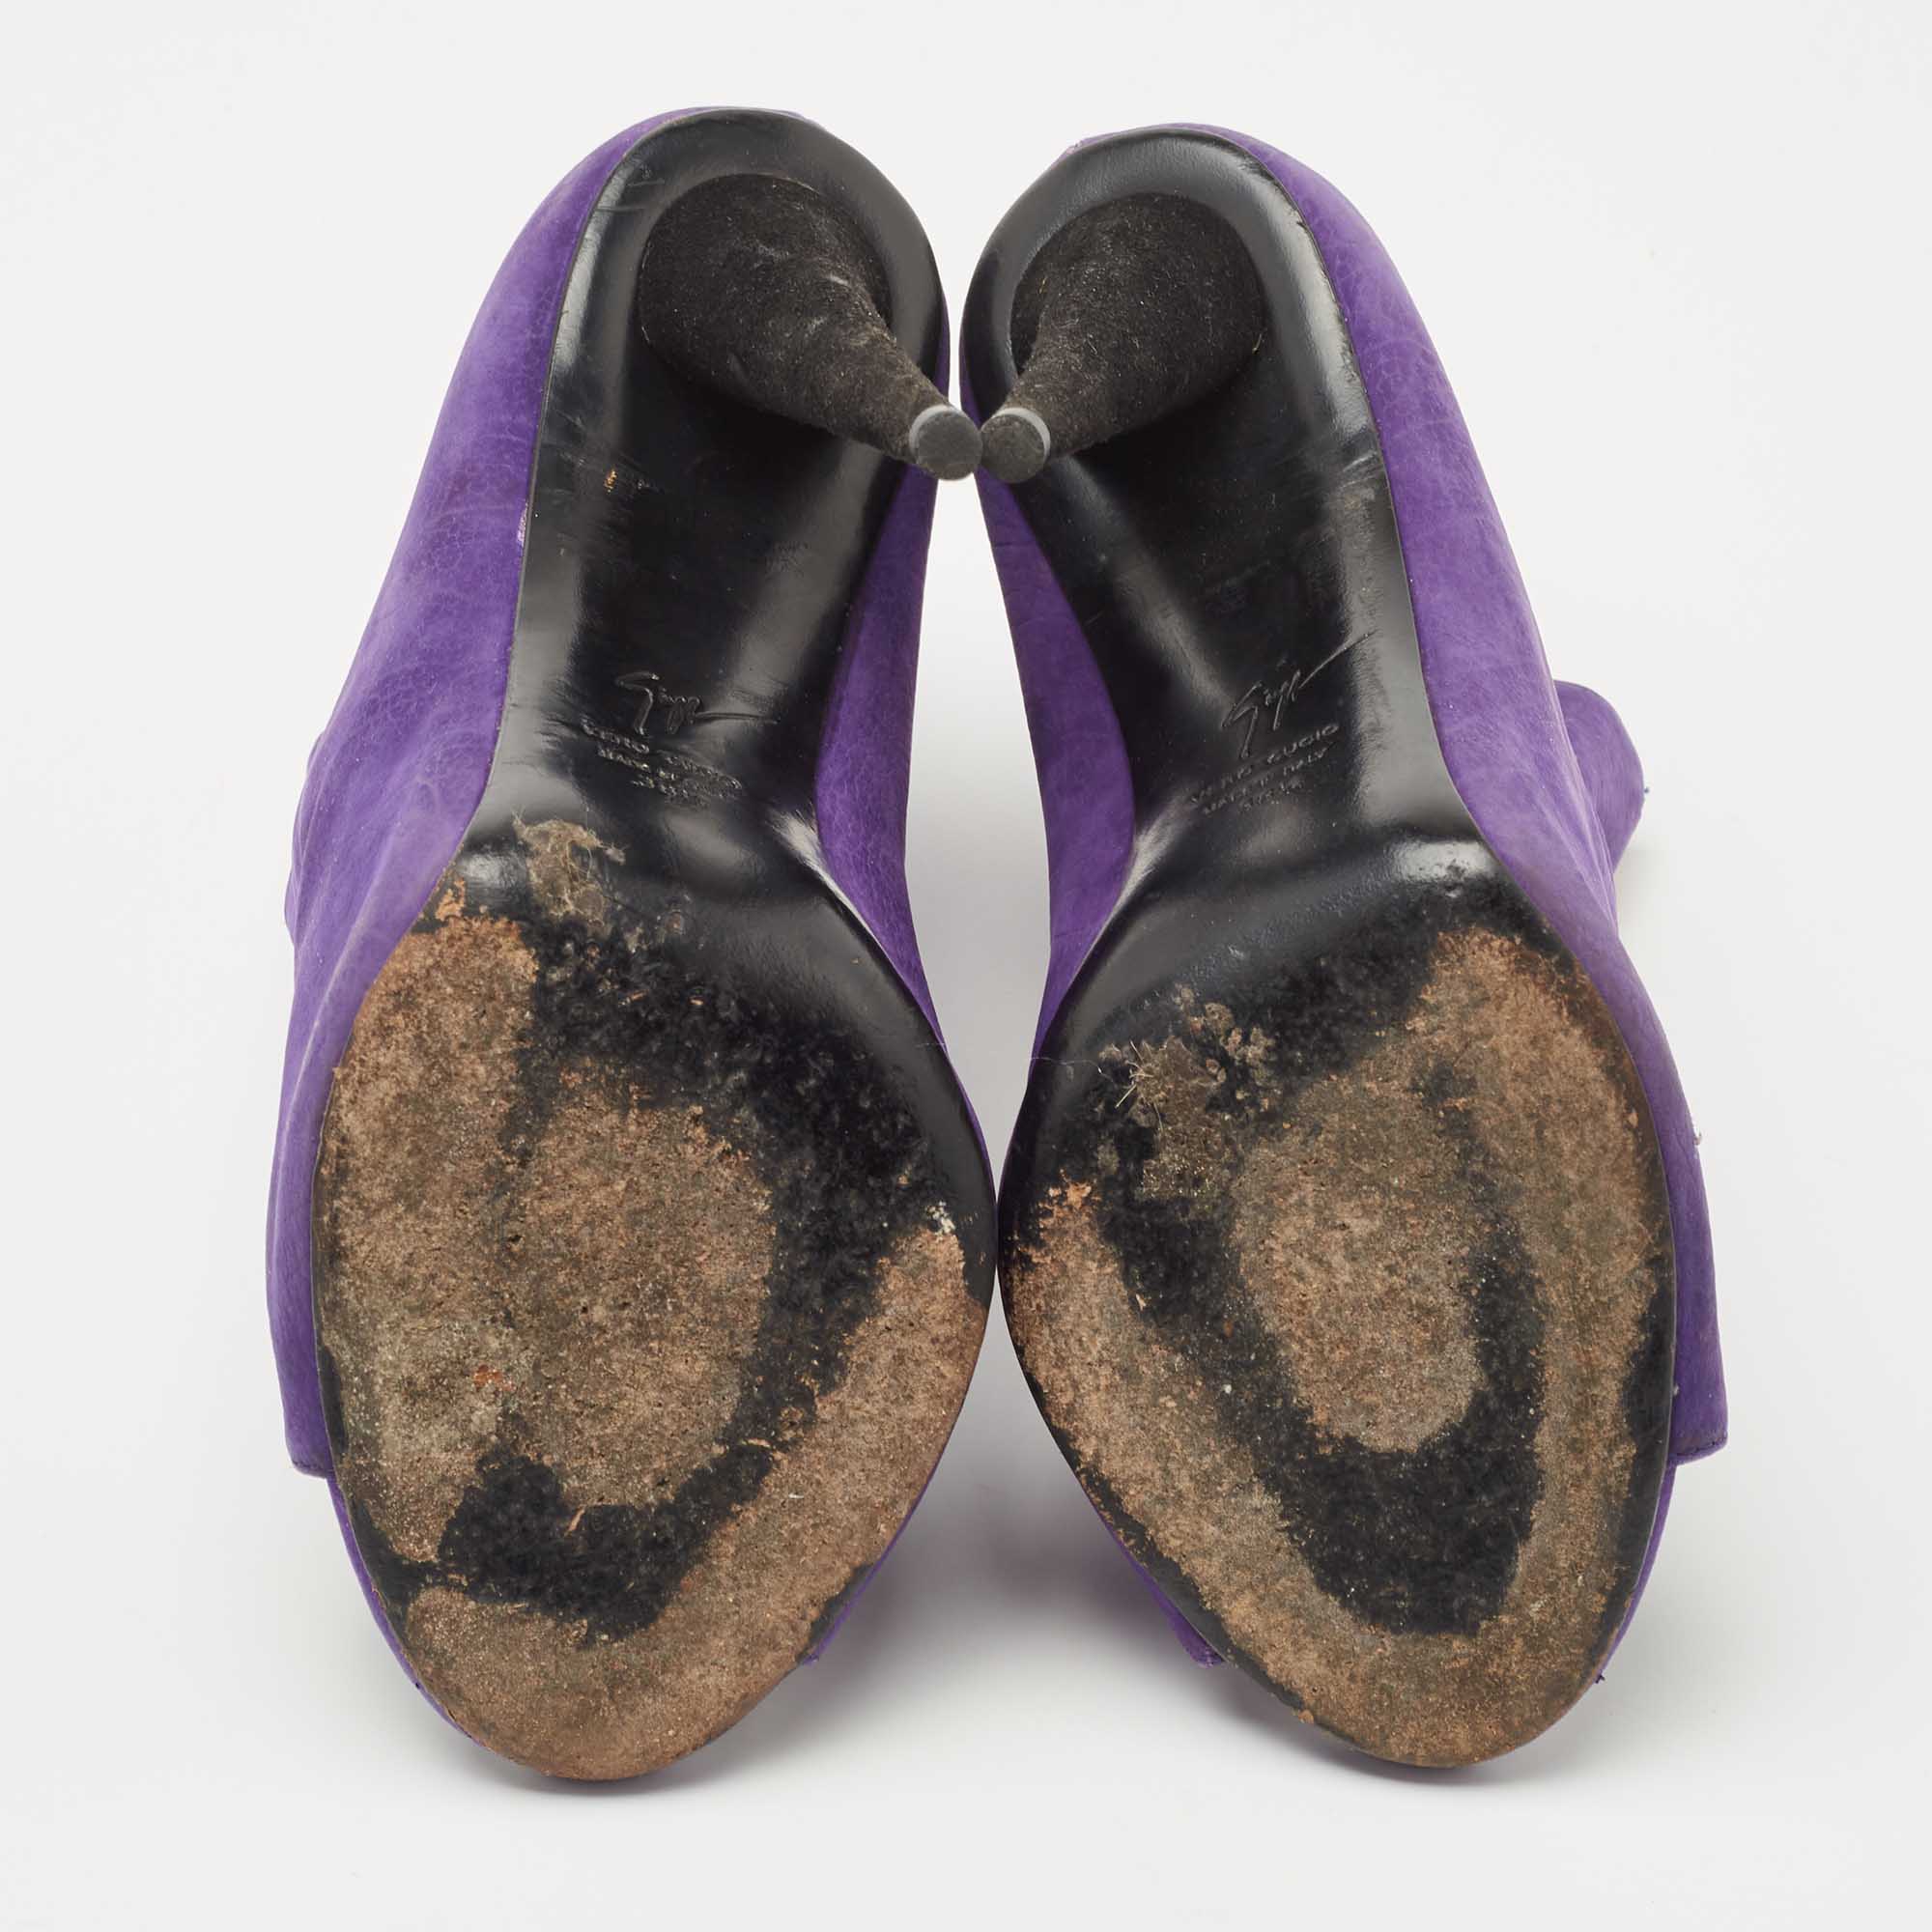 Giuseppe Zanotti Purple Nubuck Leather Ankle Boots Size 38.5